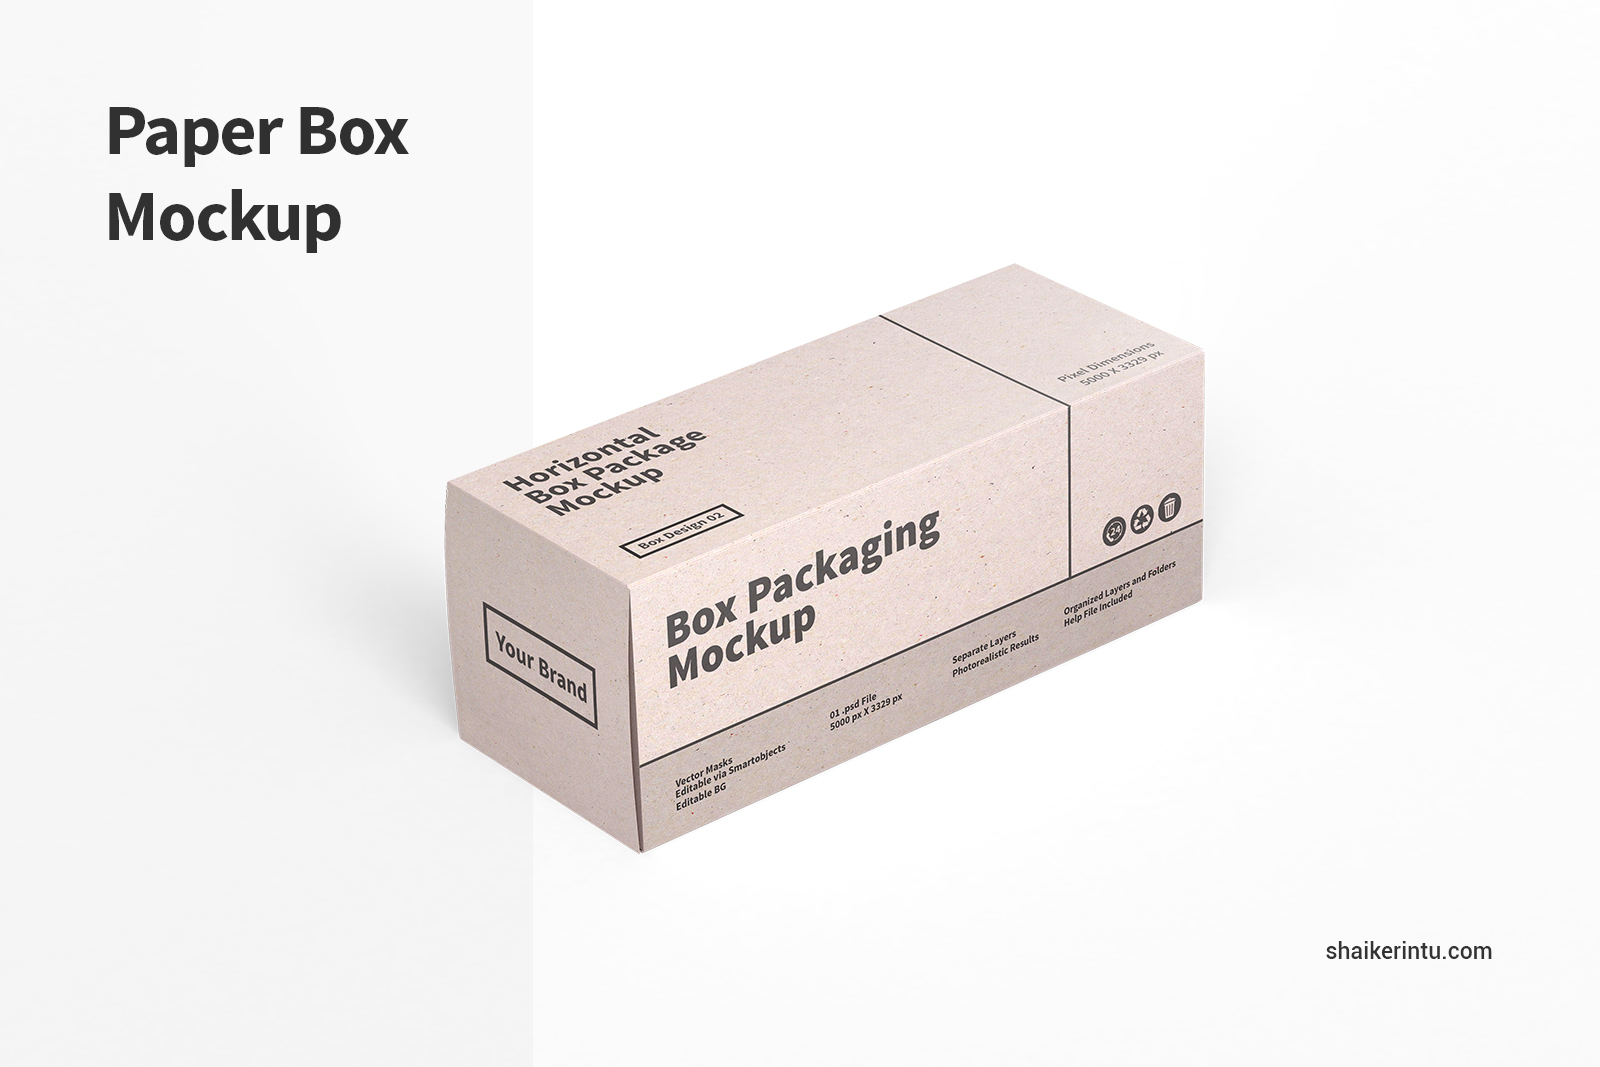 Download Rectangular Paper Box Mockup Shaikerintu Com PSD Mockup Templates